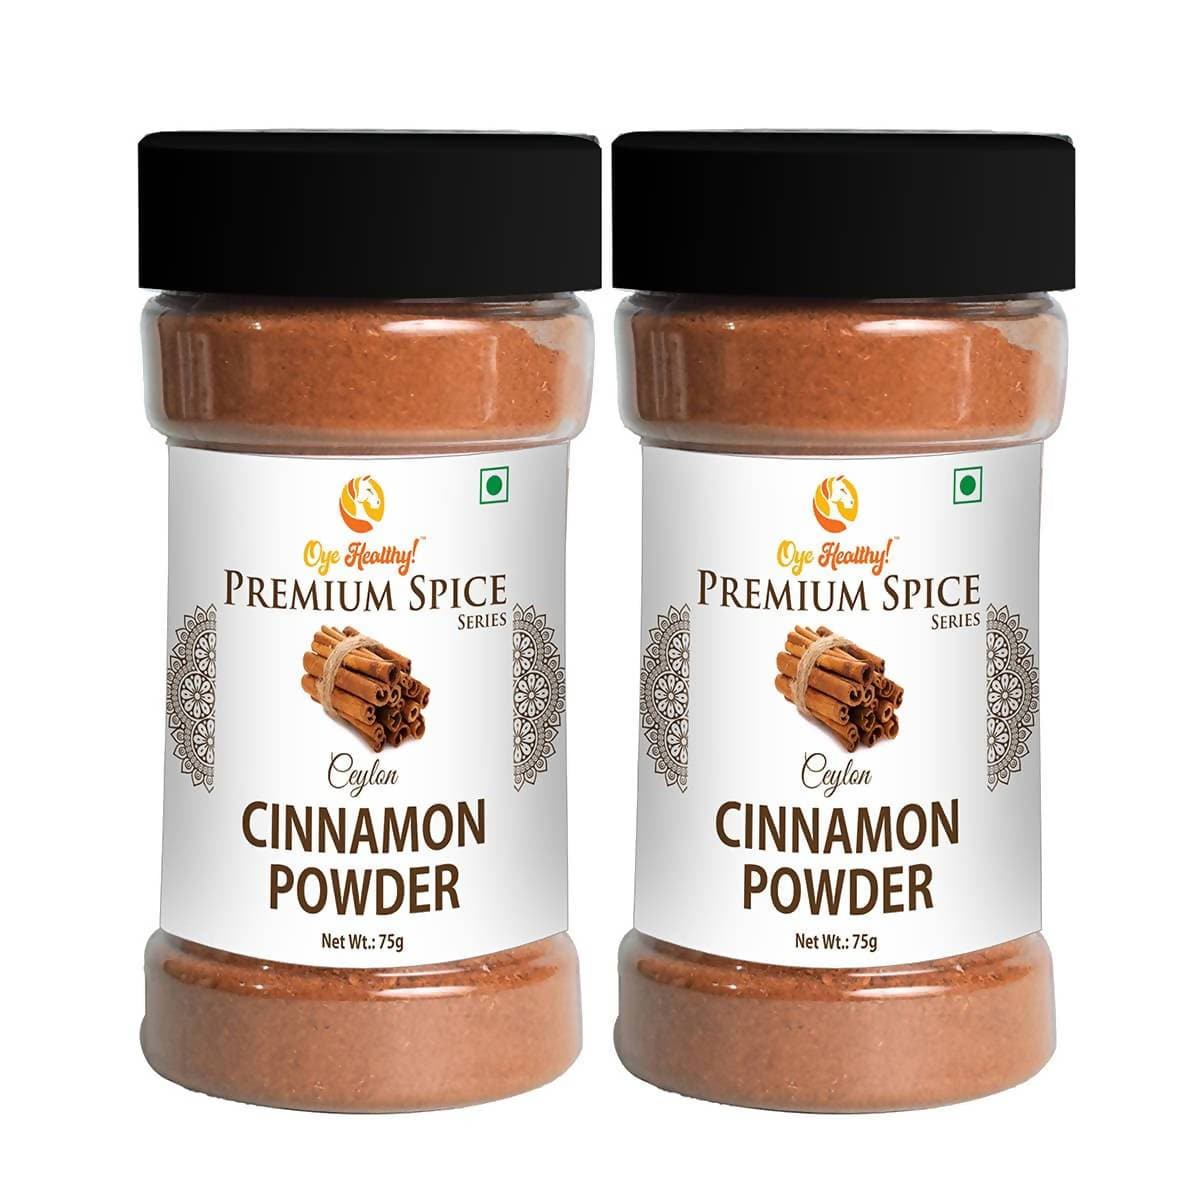 Oye Healthy Premium Spice Series Ceylon Cinnamon Powder